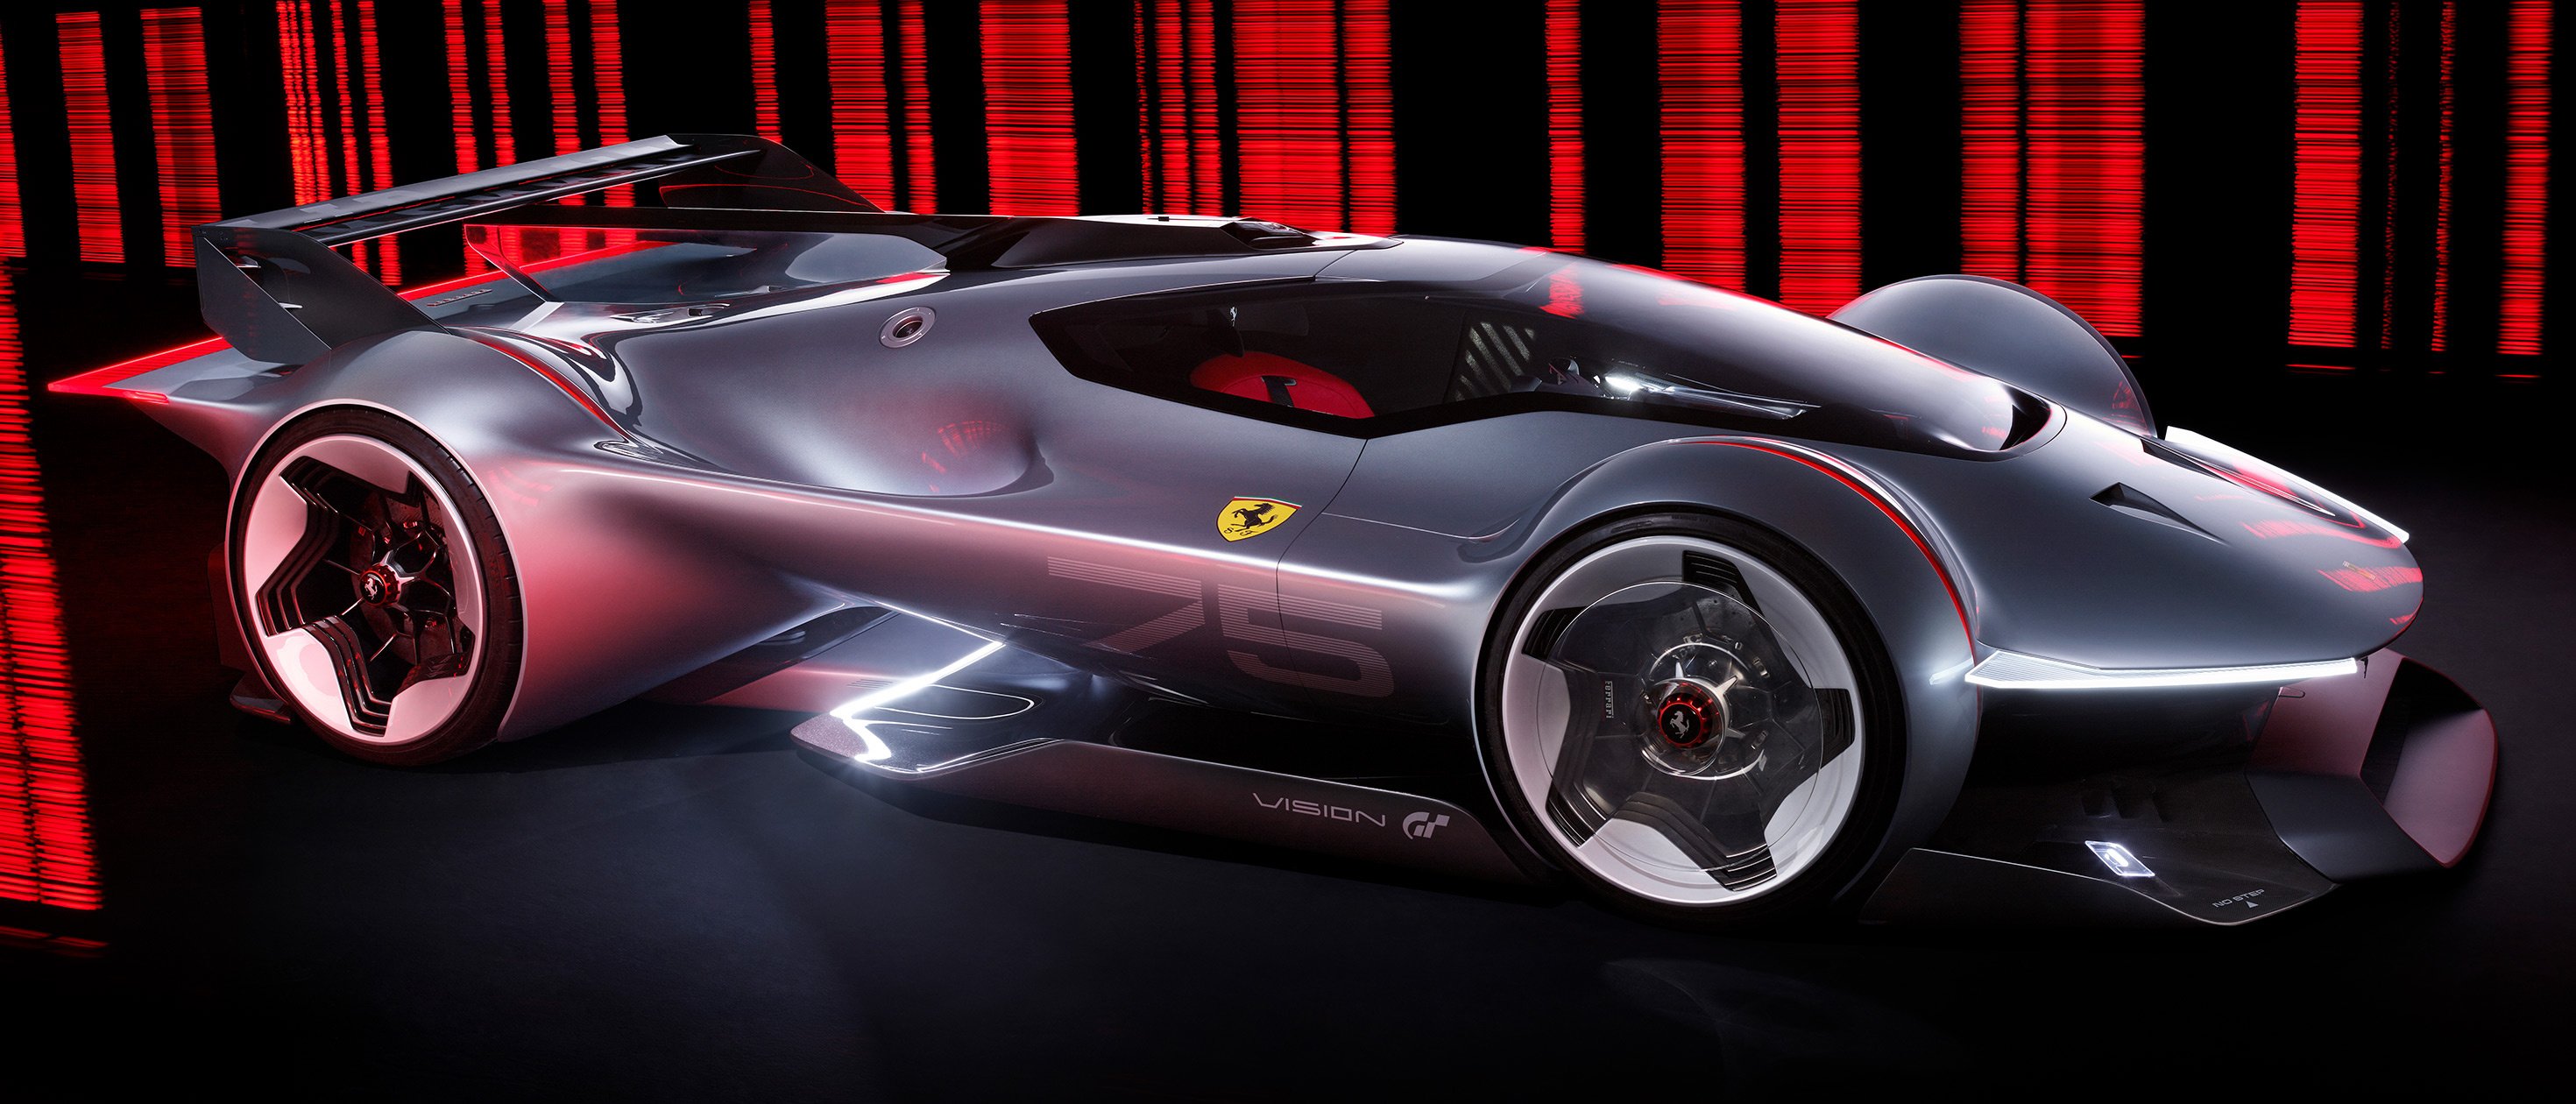 Ferrari Vision Gran Turismo - gran-turismo.com